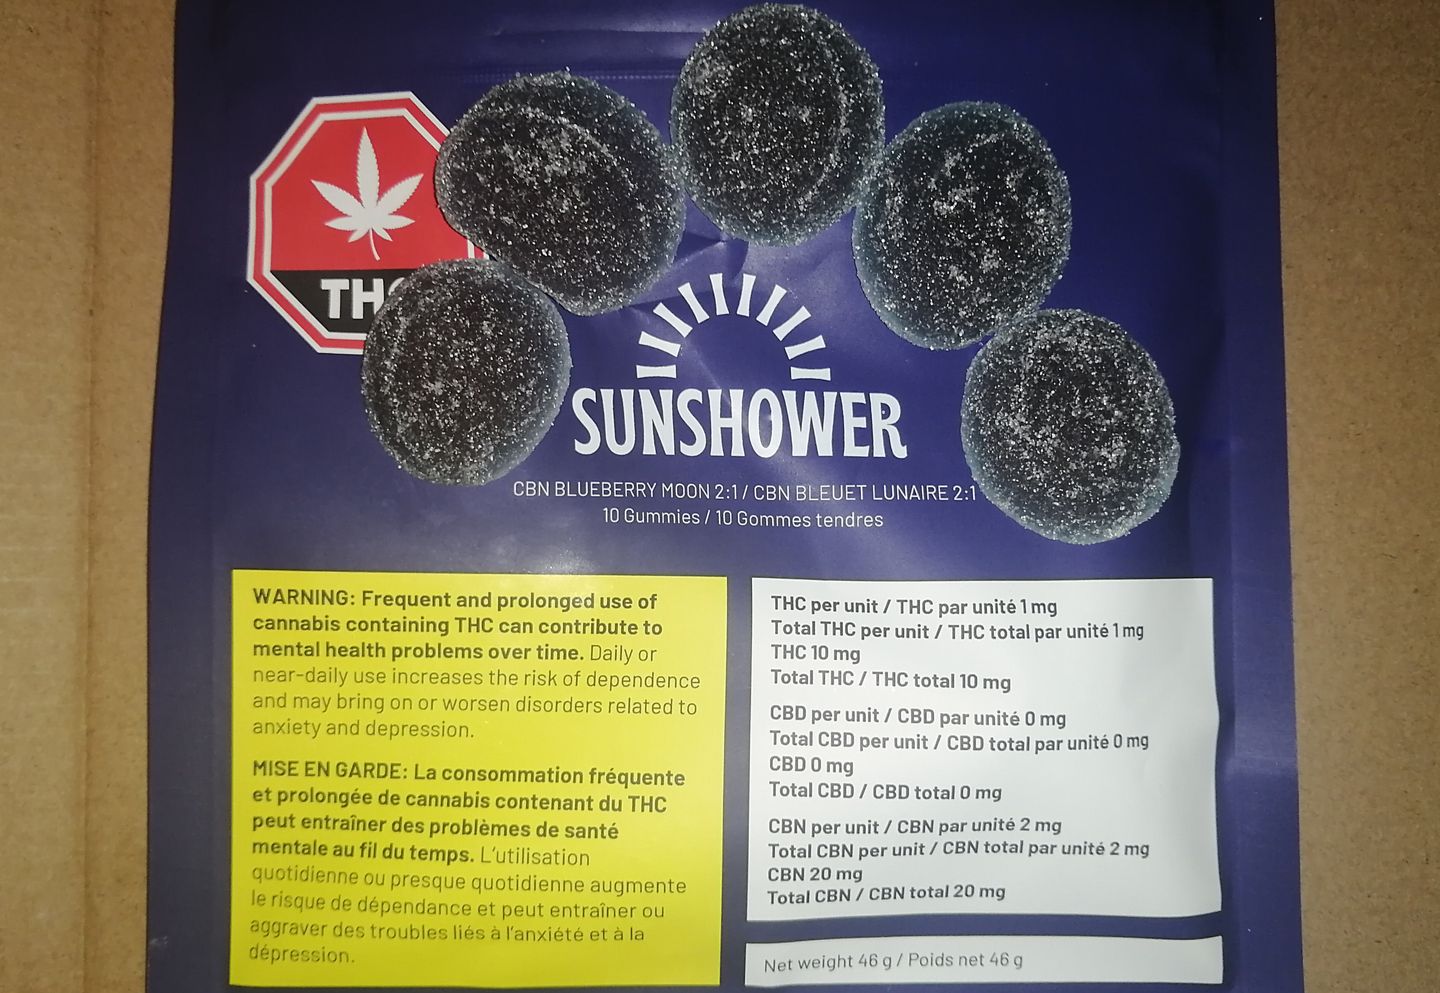 We tried CBN Blueberry Moon Sunshower gummies